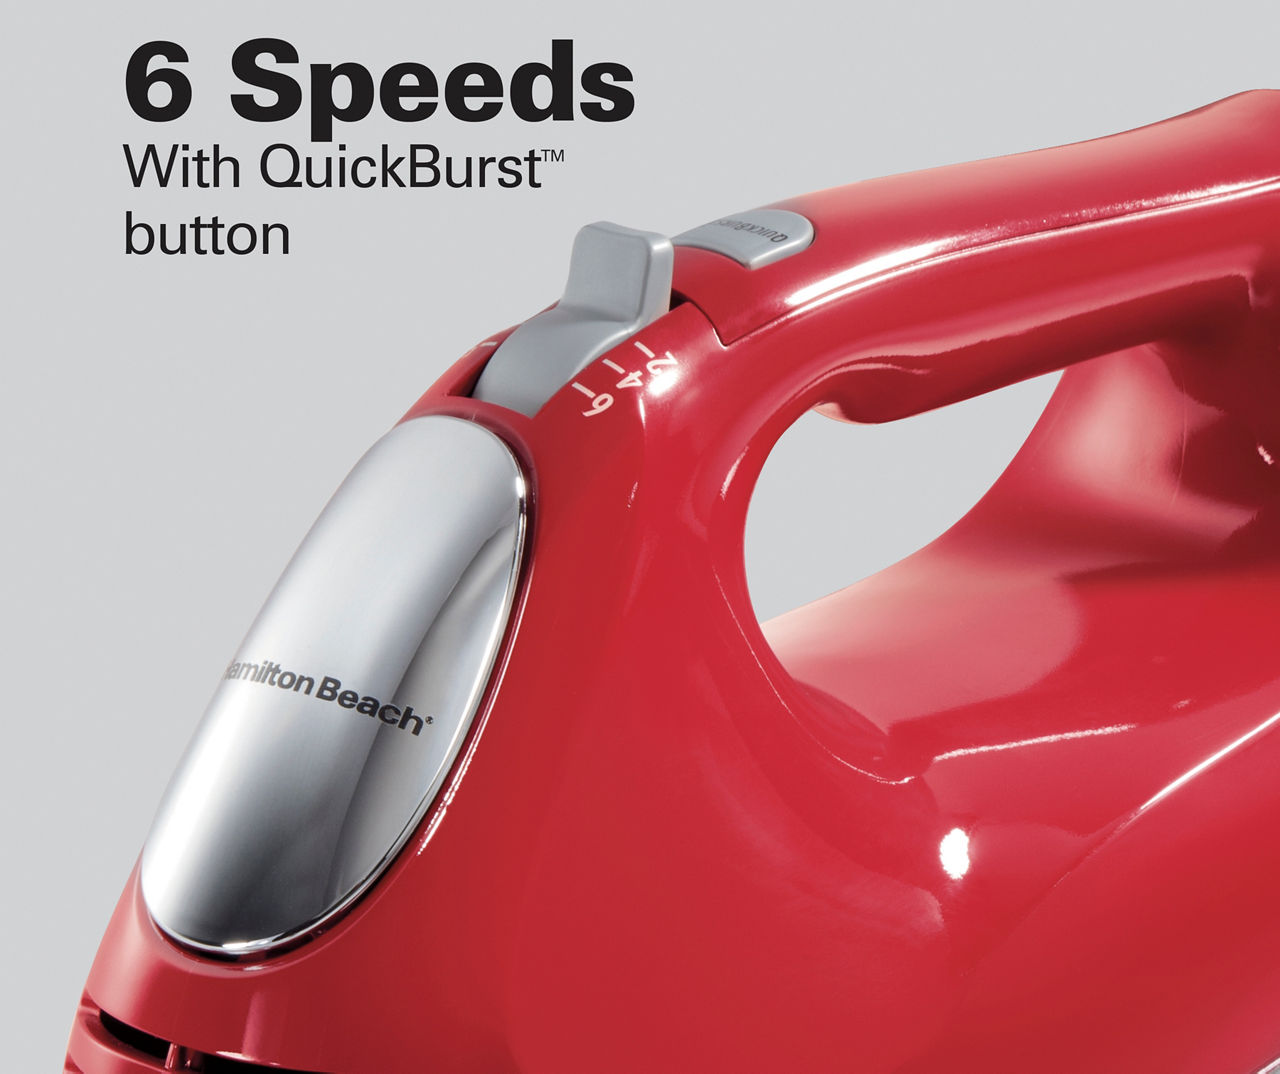 Hamilton Beach 6 Speed Hand Mixer with Quick Burst™ - 62649